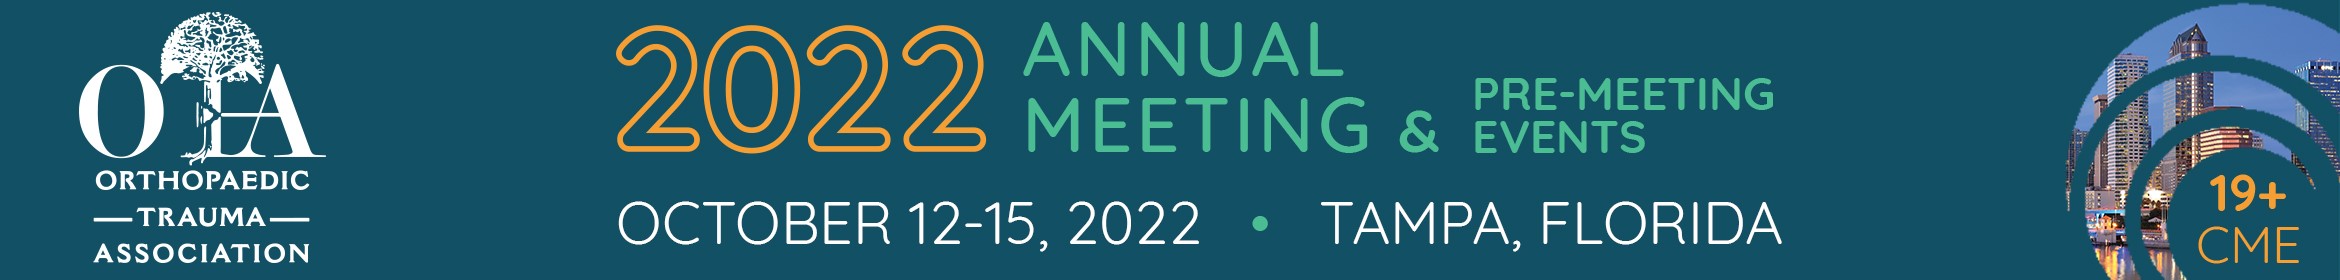 OTA 2022 Annual Meeting Main banner